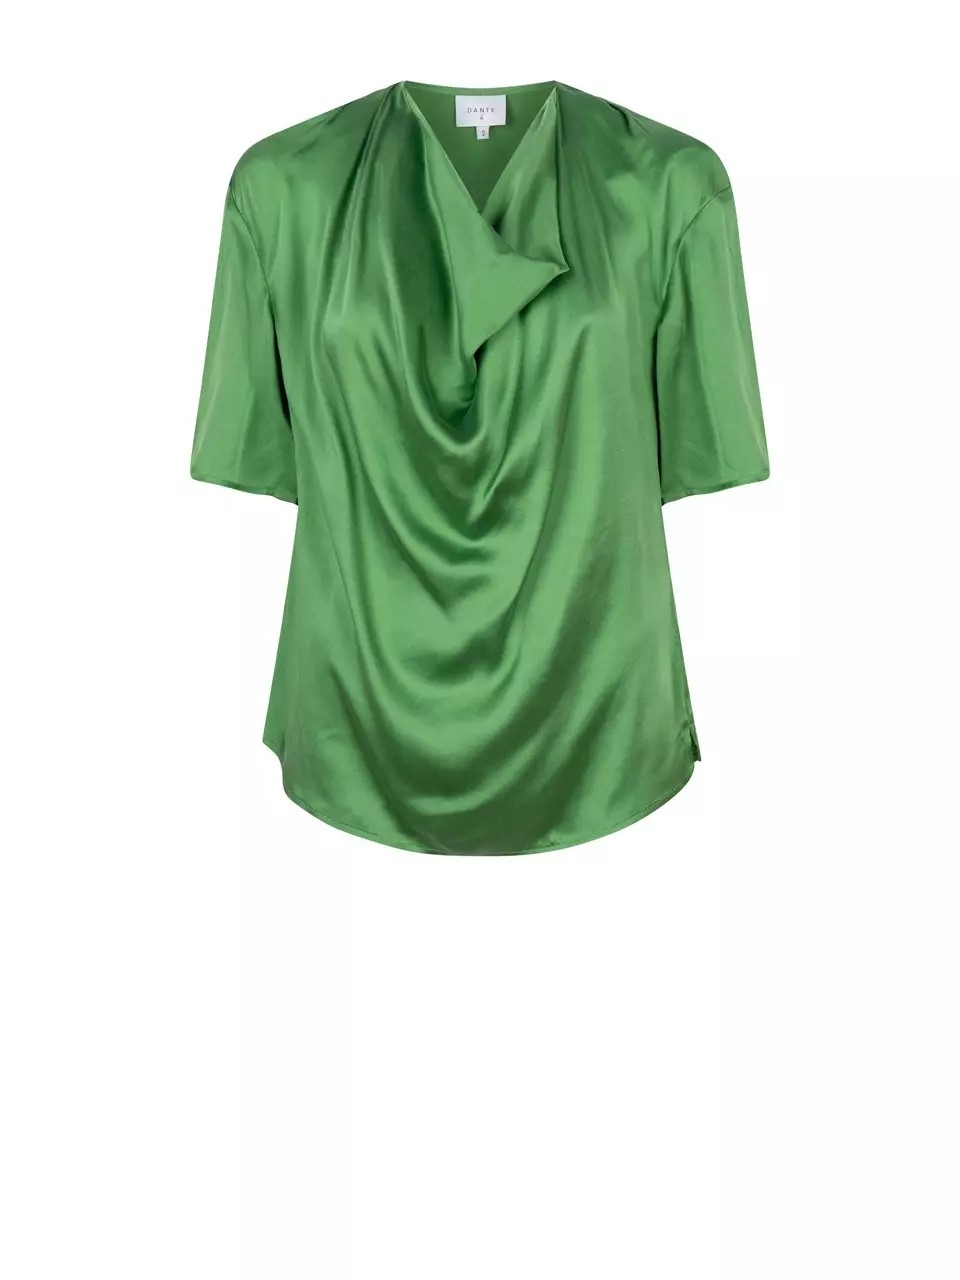 Vakker silkebluse fra Dante i en fantastisk grønnfarge. Blusen har korte ermer og en dekorativ, drapert hals. Den er laget i en fantastisk stretchy silkekvalitet. 